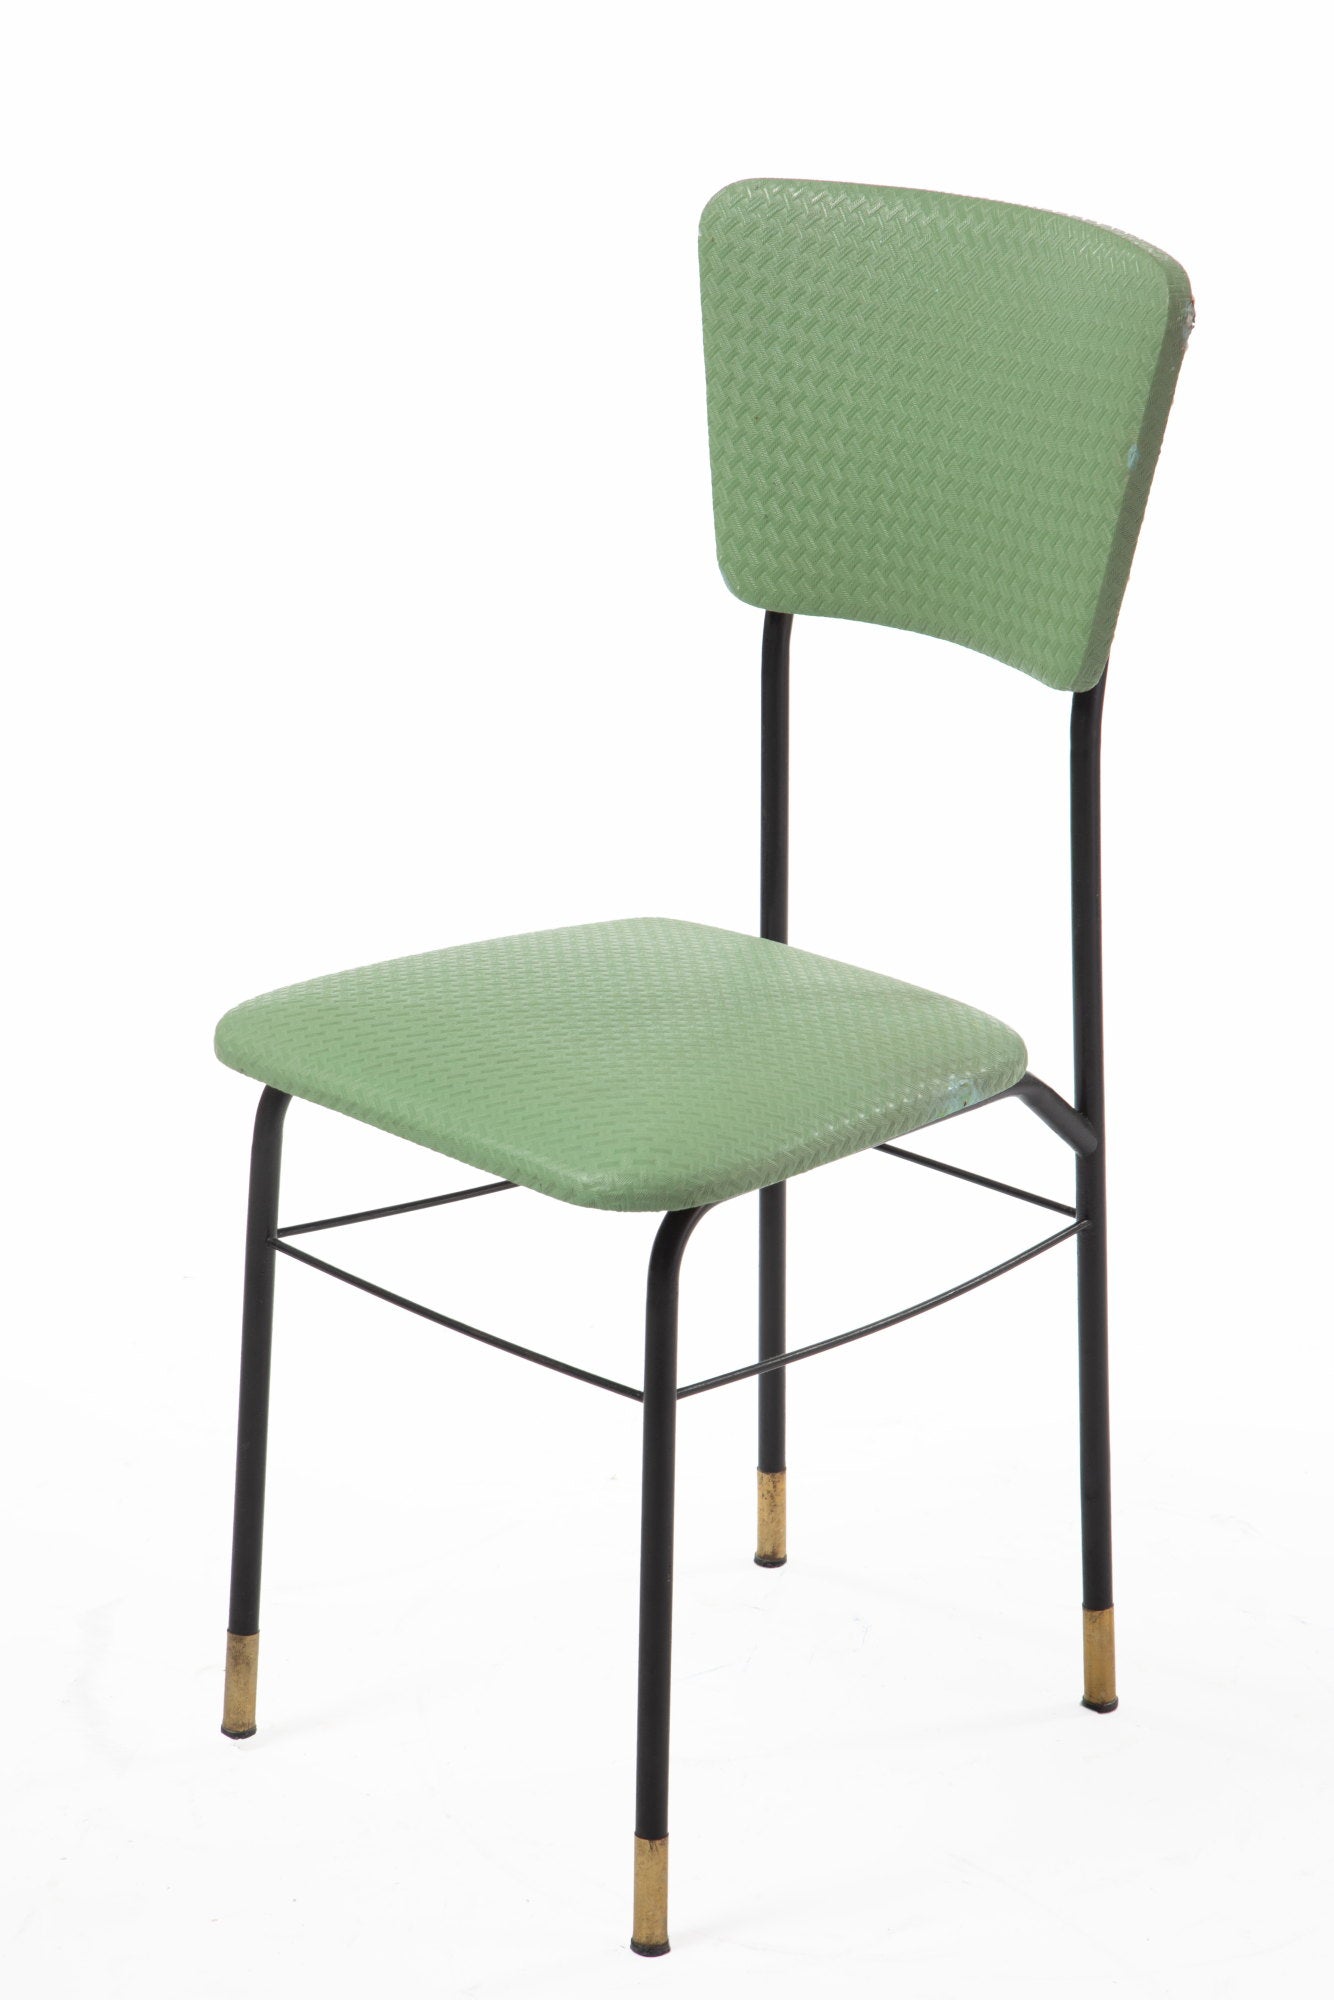 Five 60s green vinyl chairs